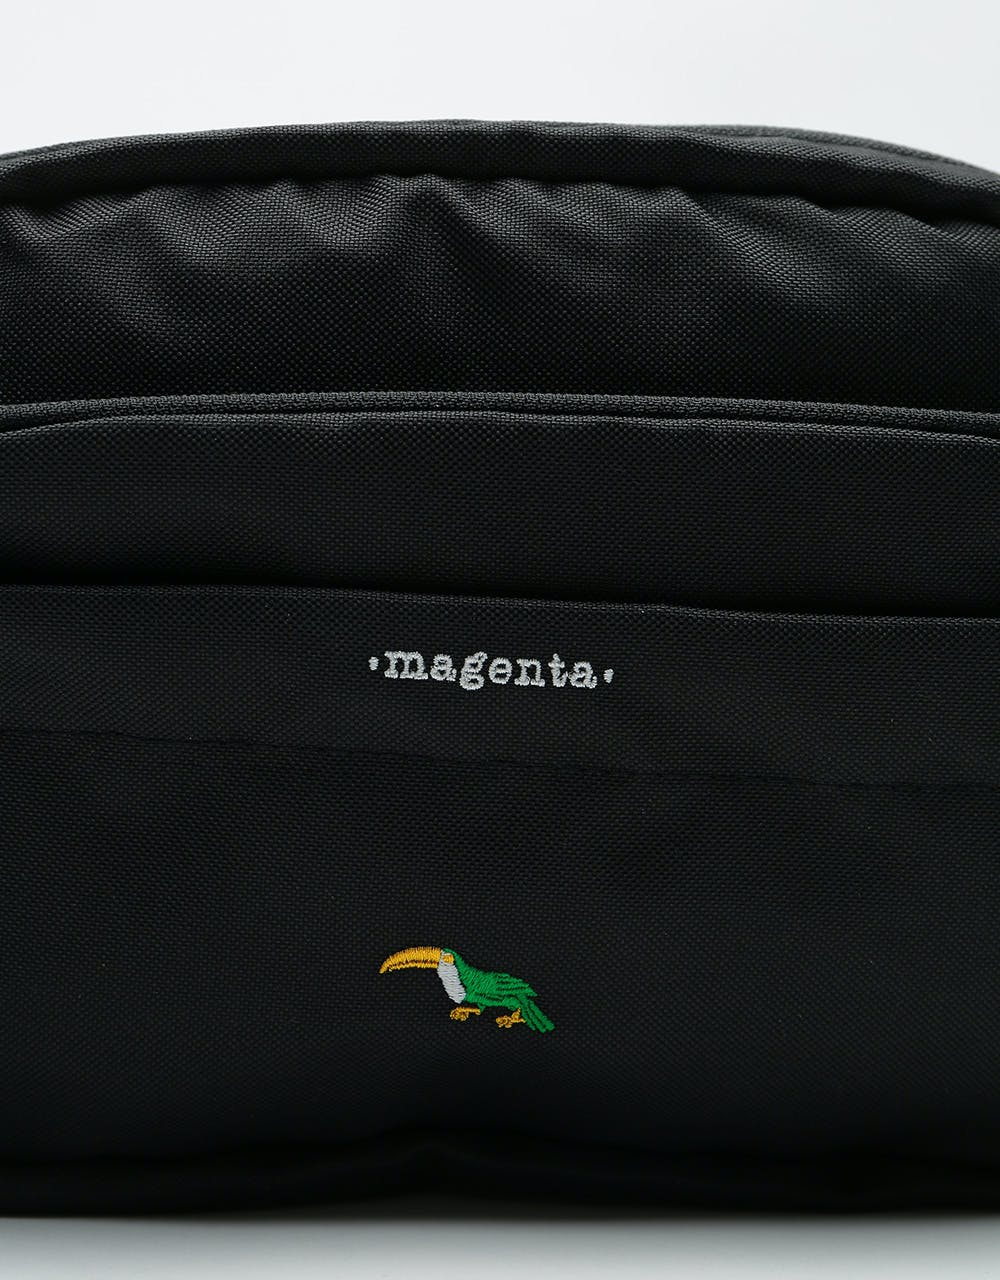 Magenta Messenger Cross Body Bag - Black